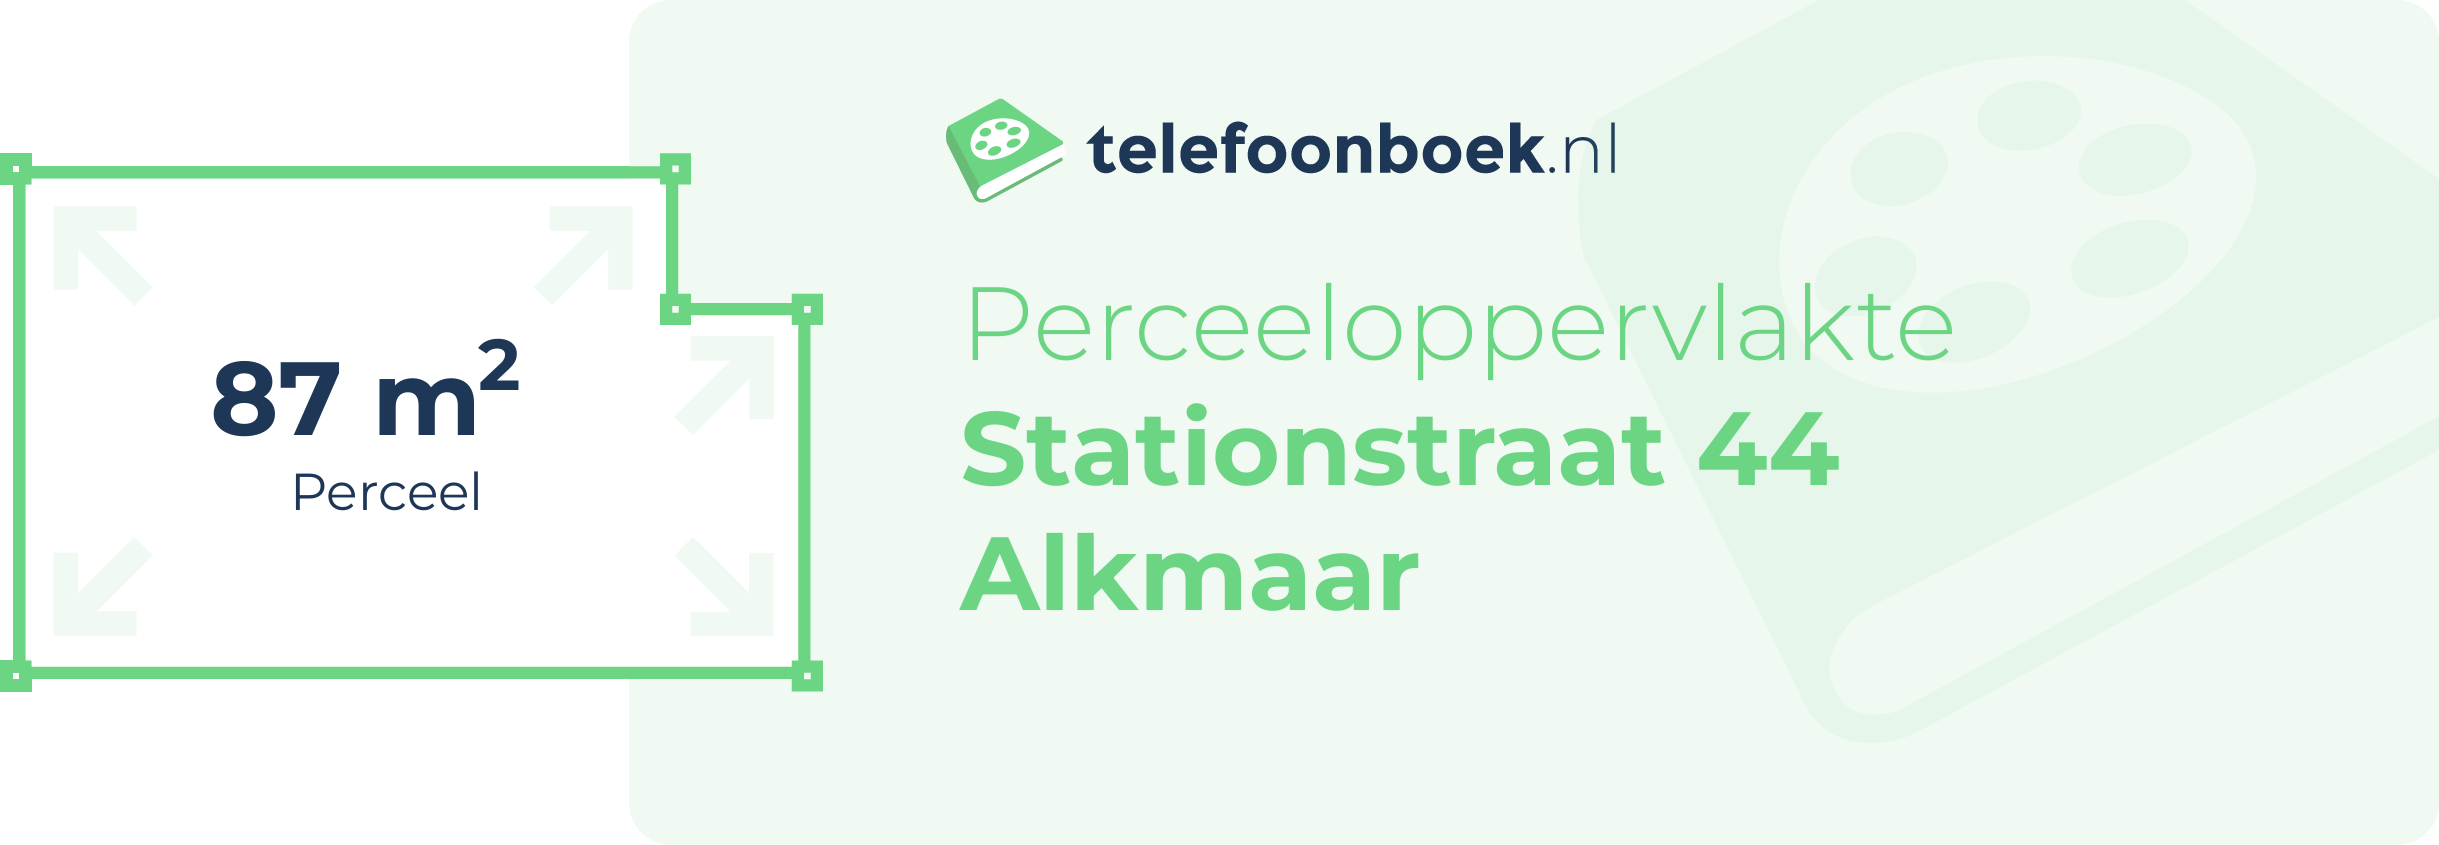 Perceeloppervlakte Stationstraat 44 Alkmaar